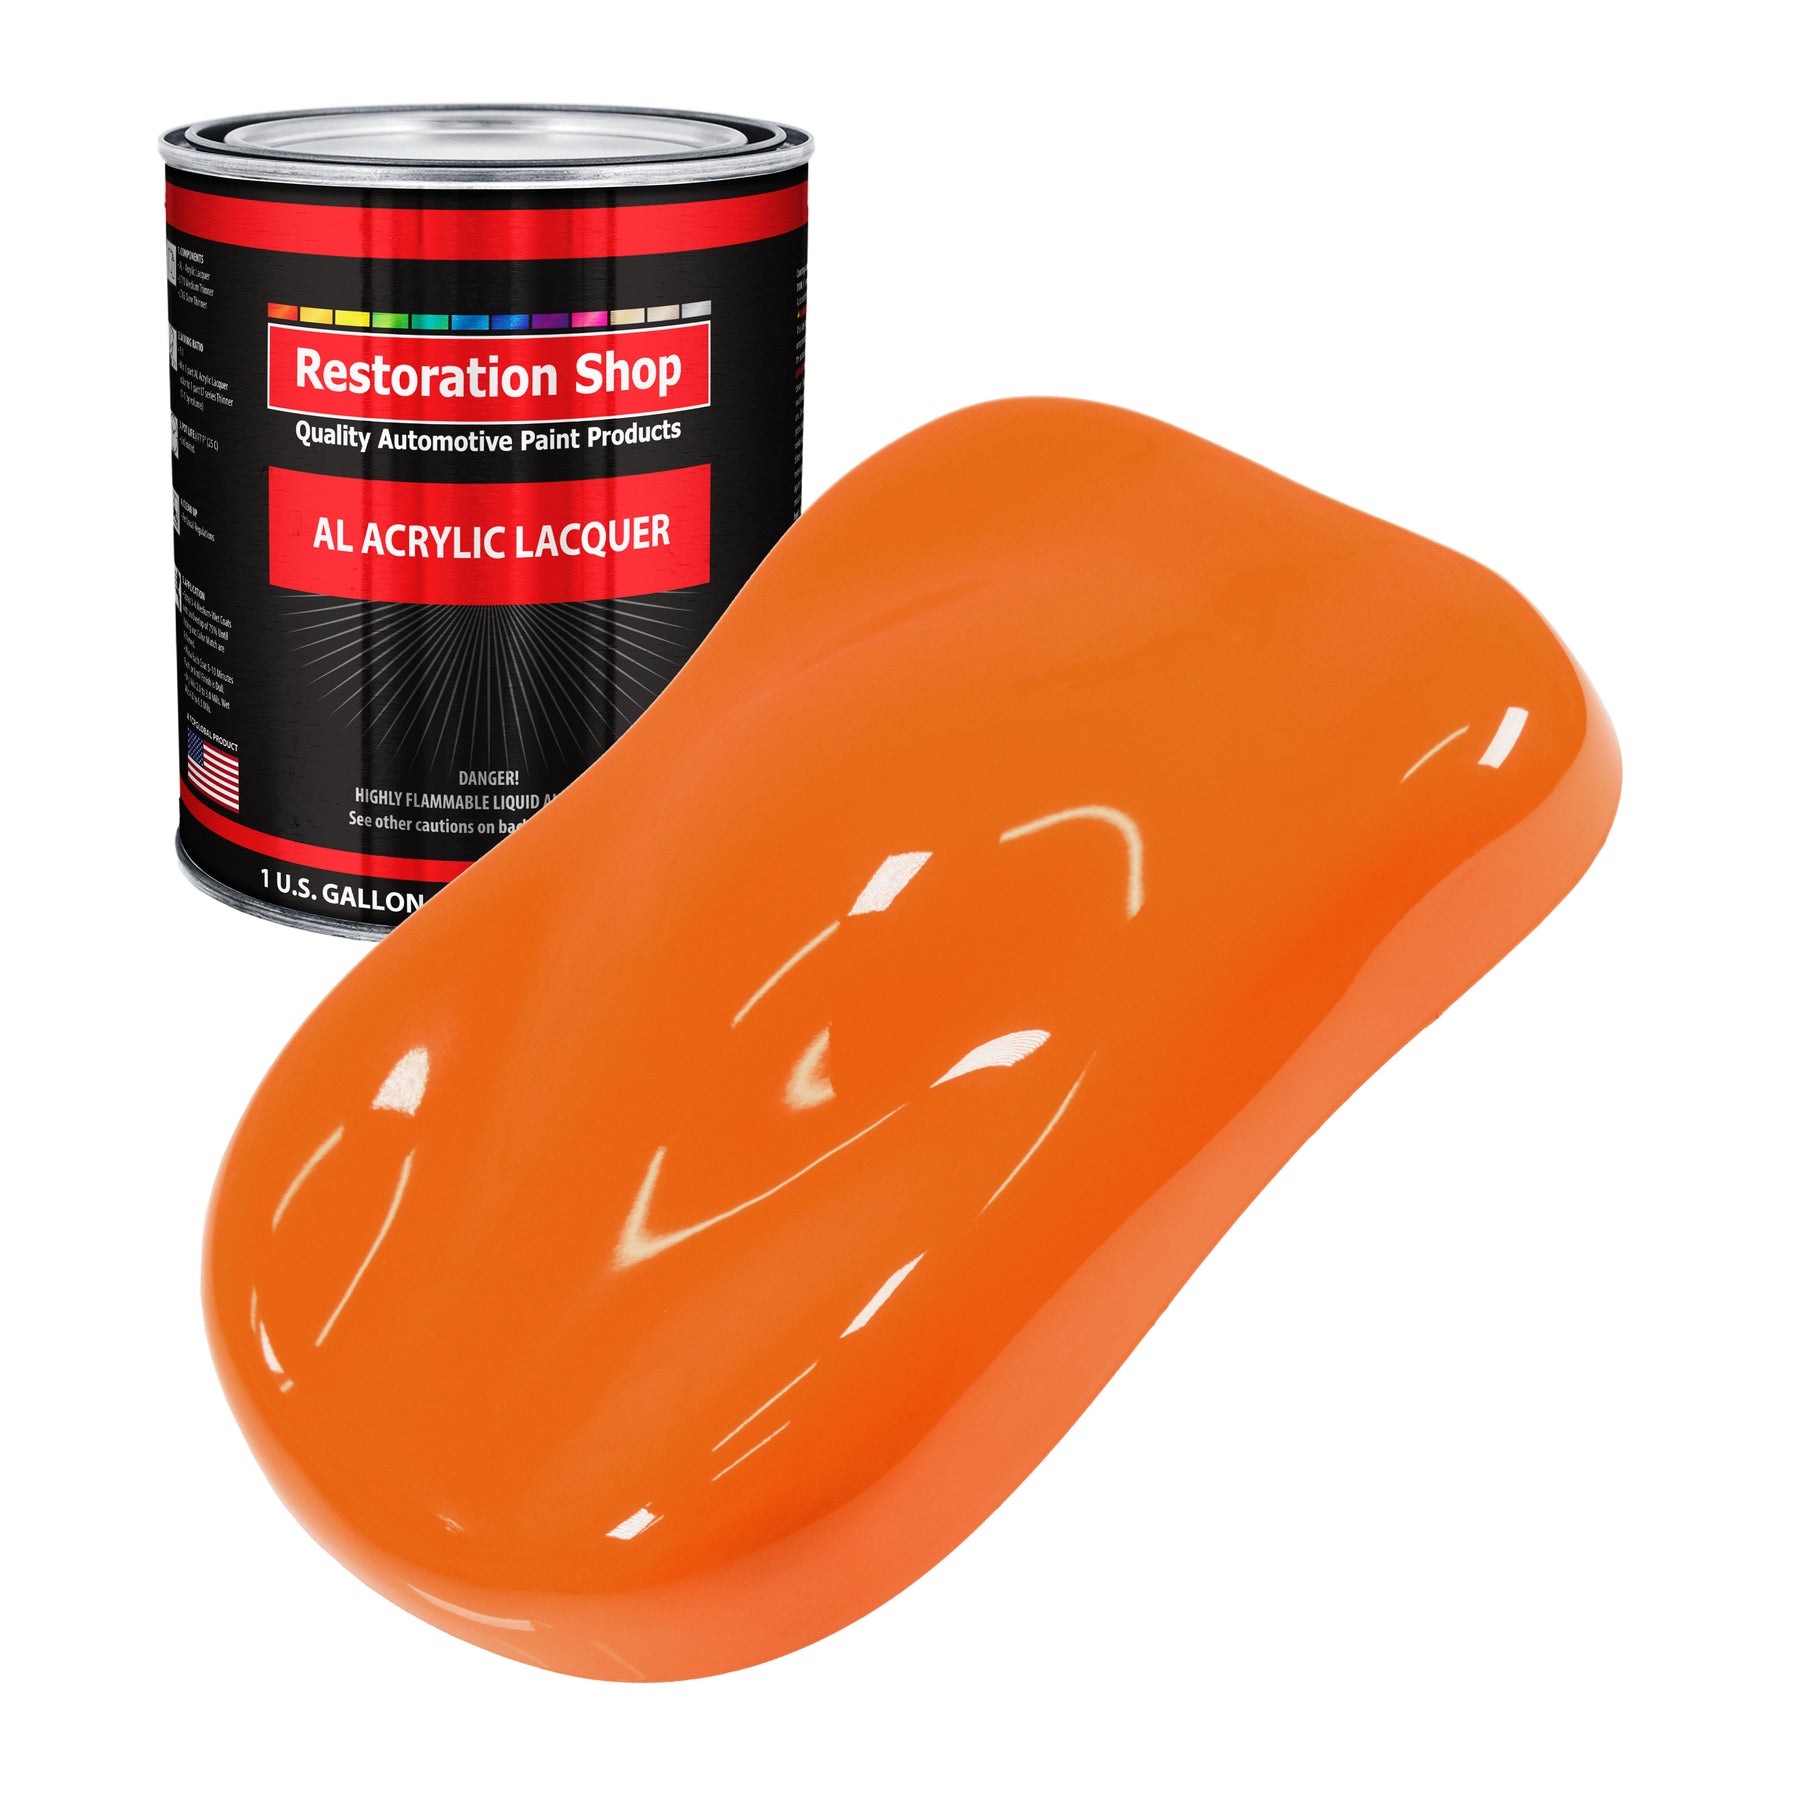 Restoration Shop - California Orange Acrylic Lacquer Auto Paint - Gallon Paint Color Only - Professional Gloss